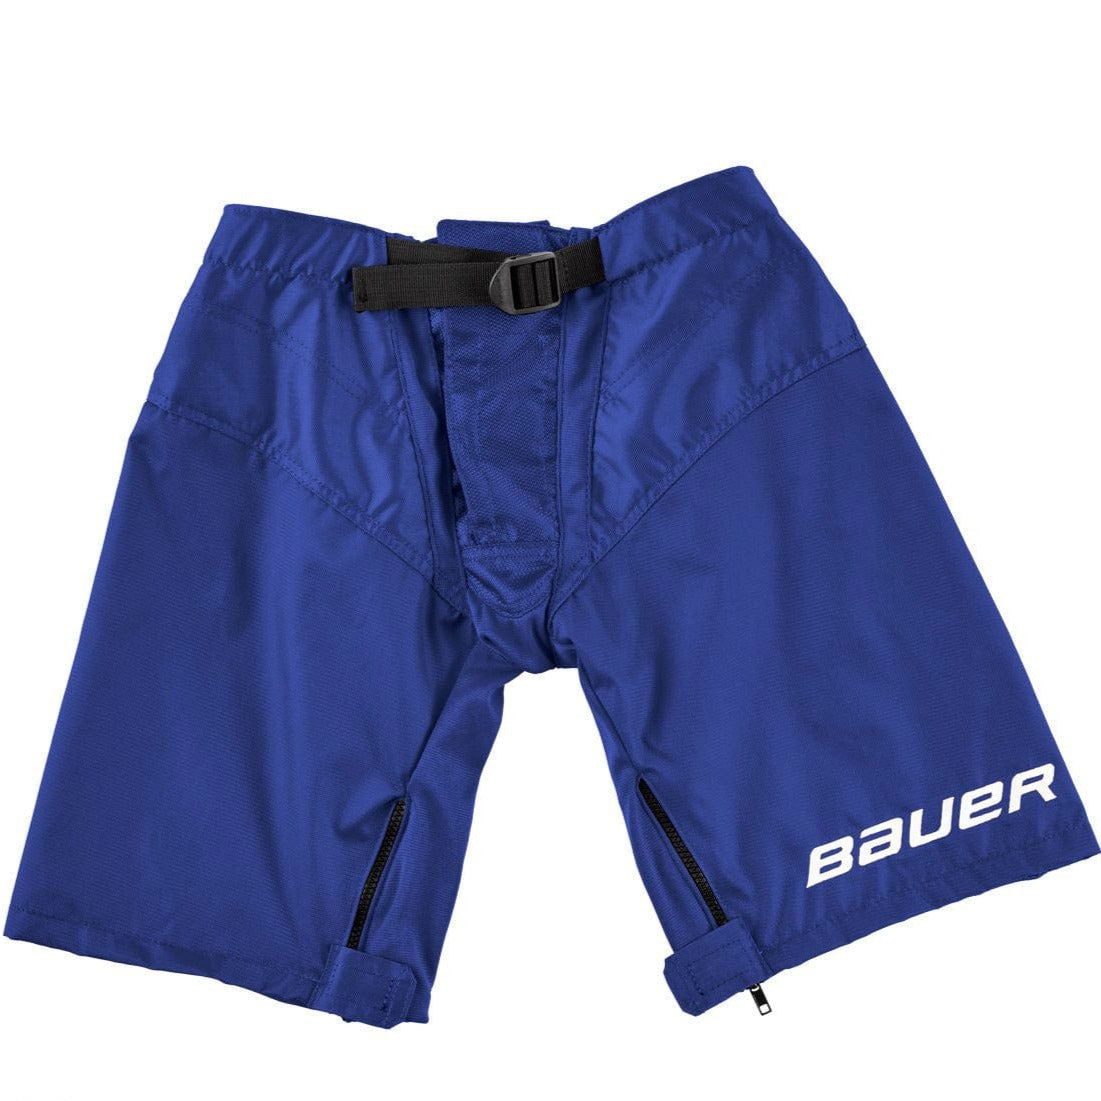 Bauer Intermediate Hockey Pant Shells